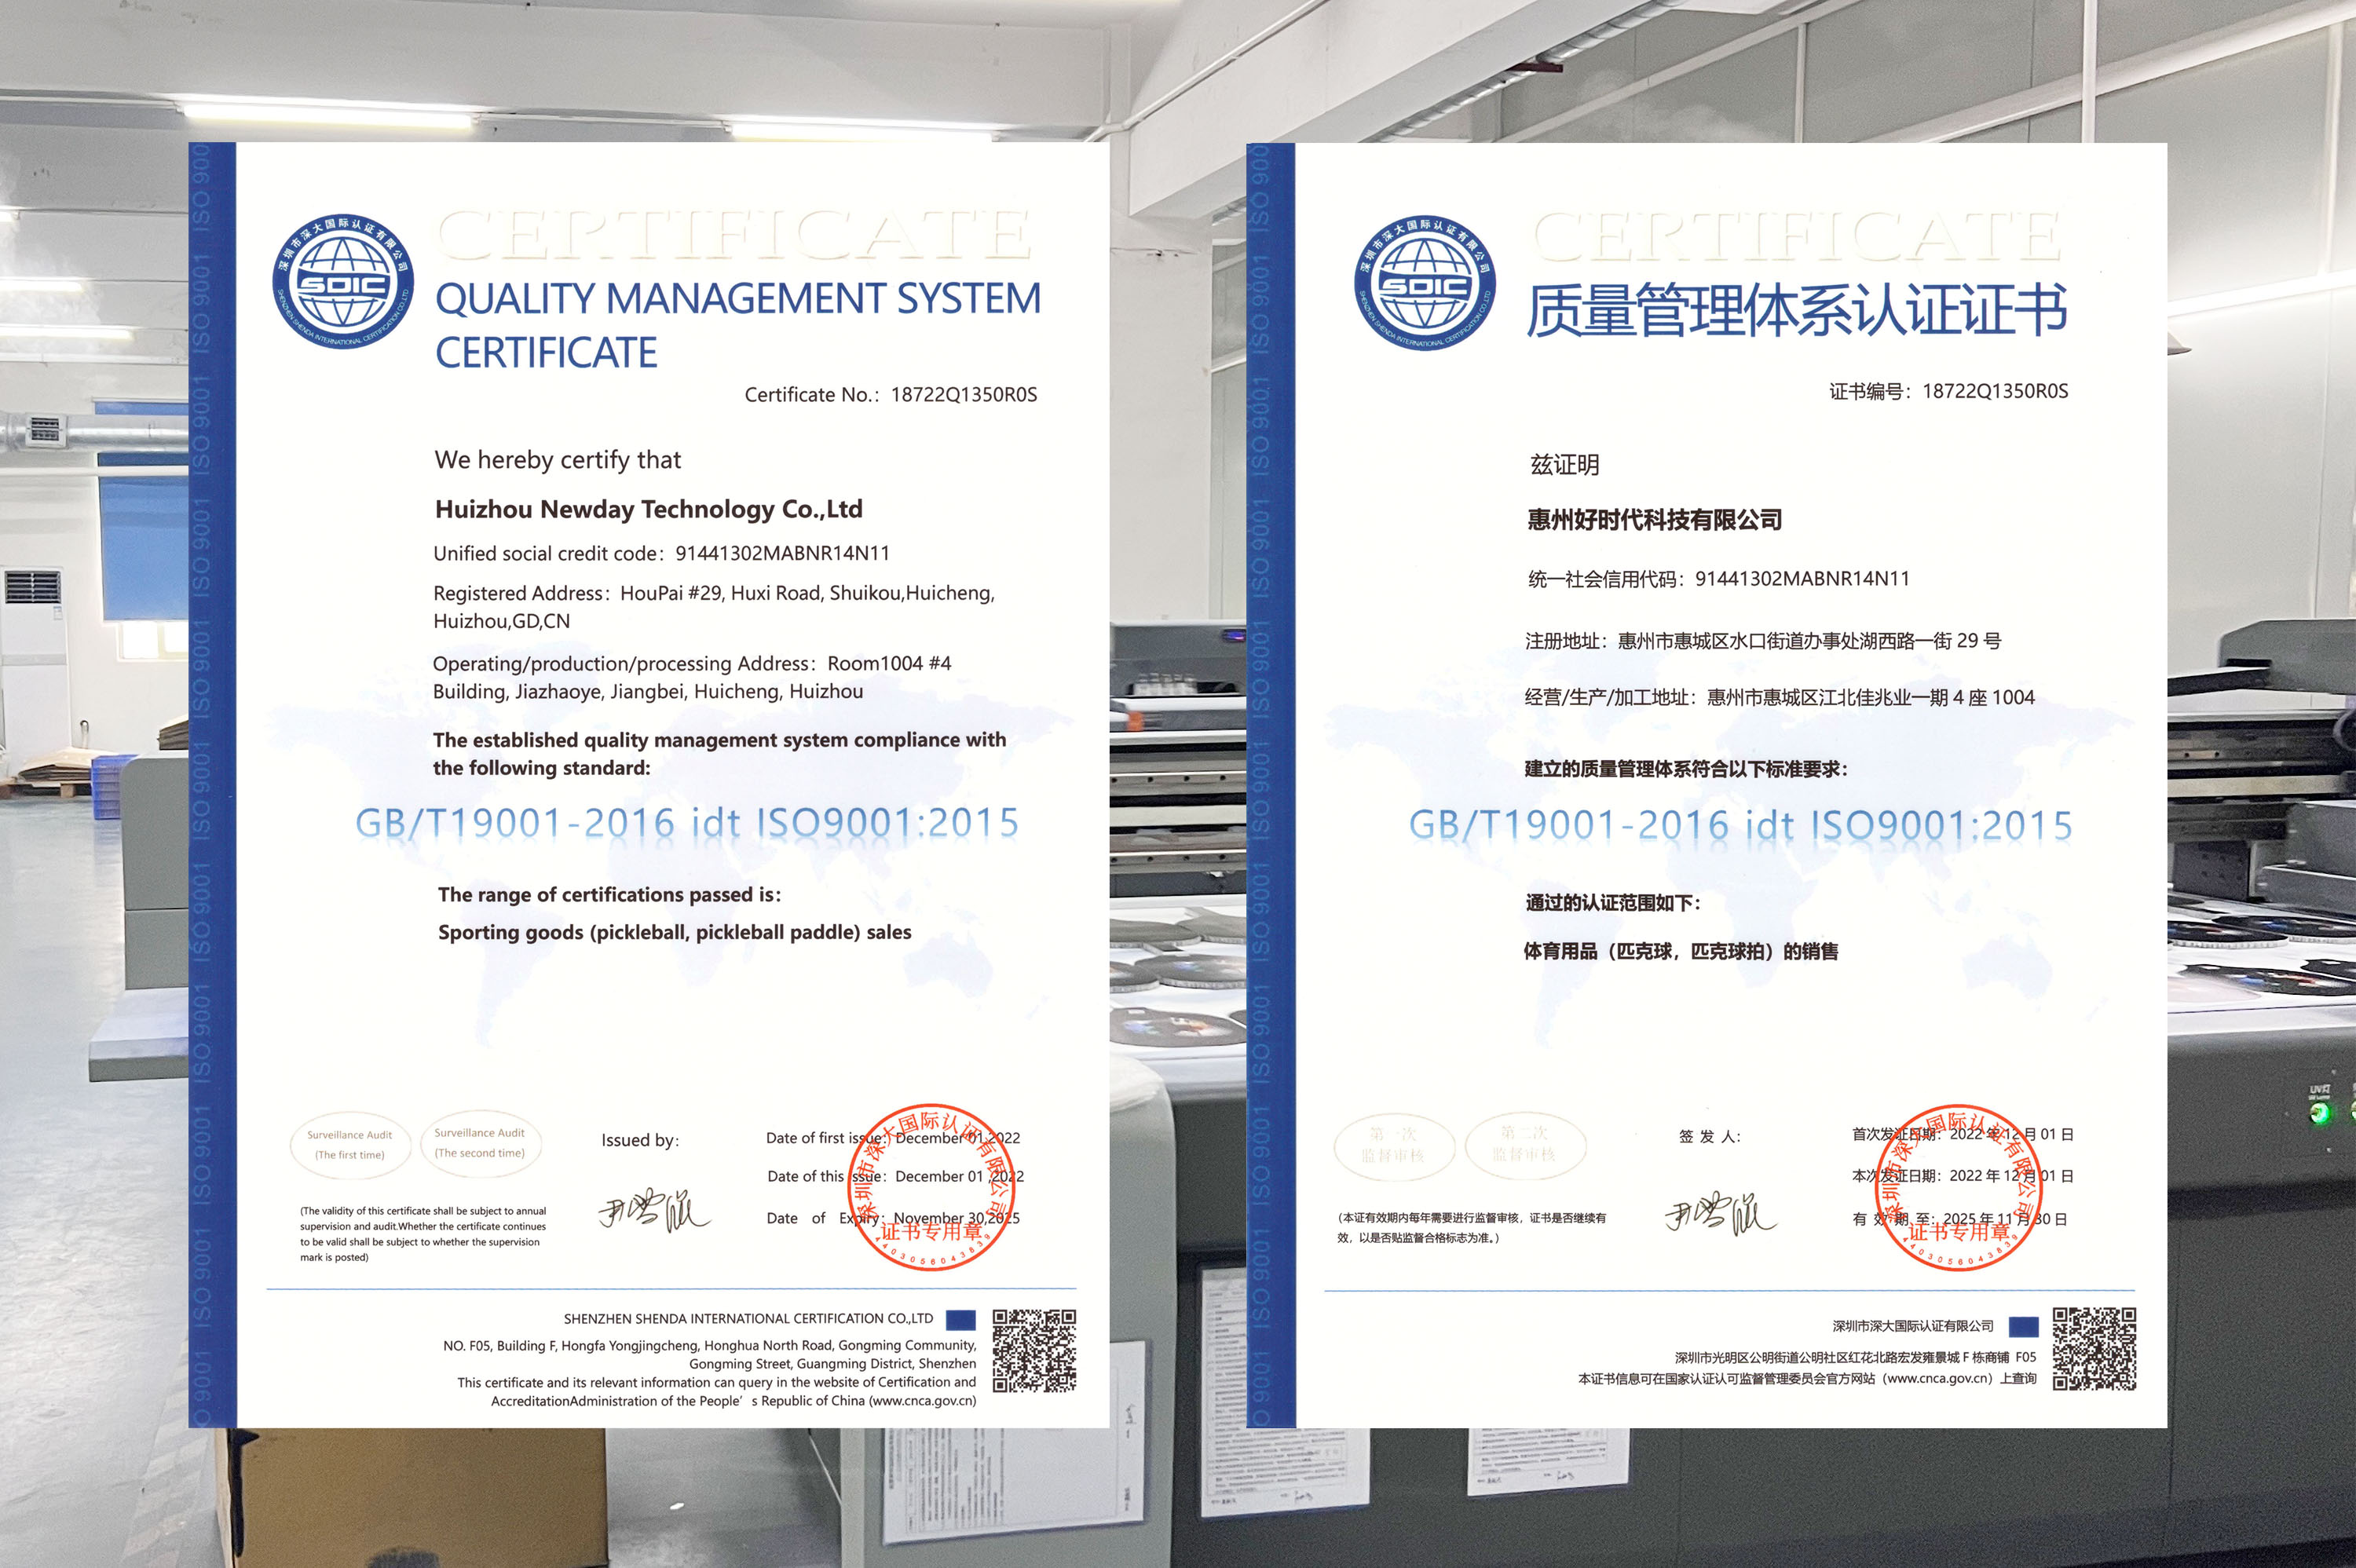 ISO9001 Certificate, nakuha namin ito!